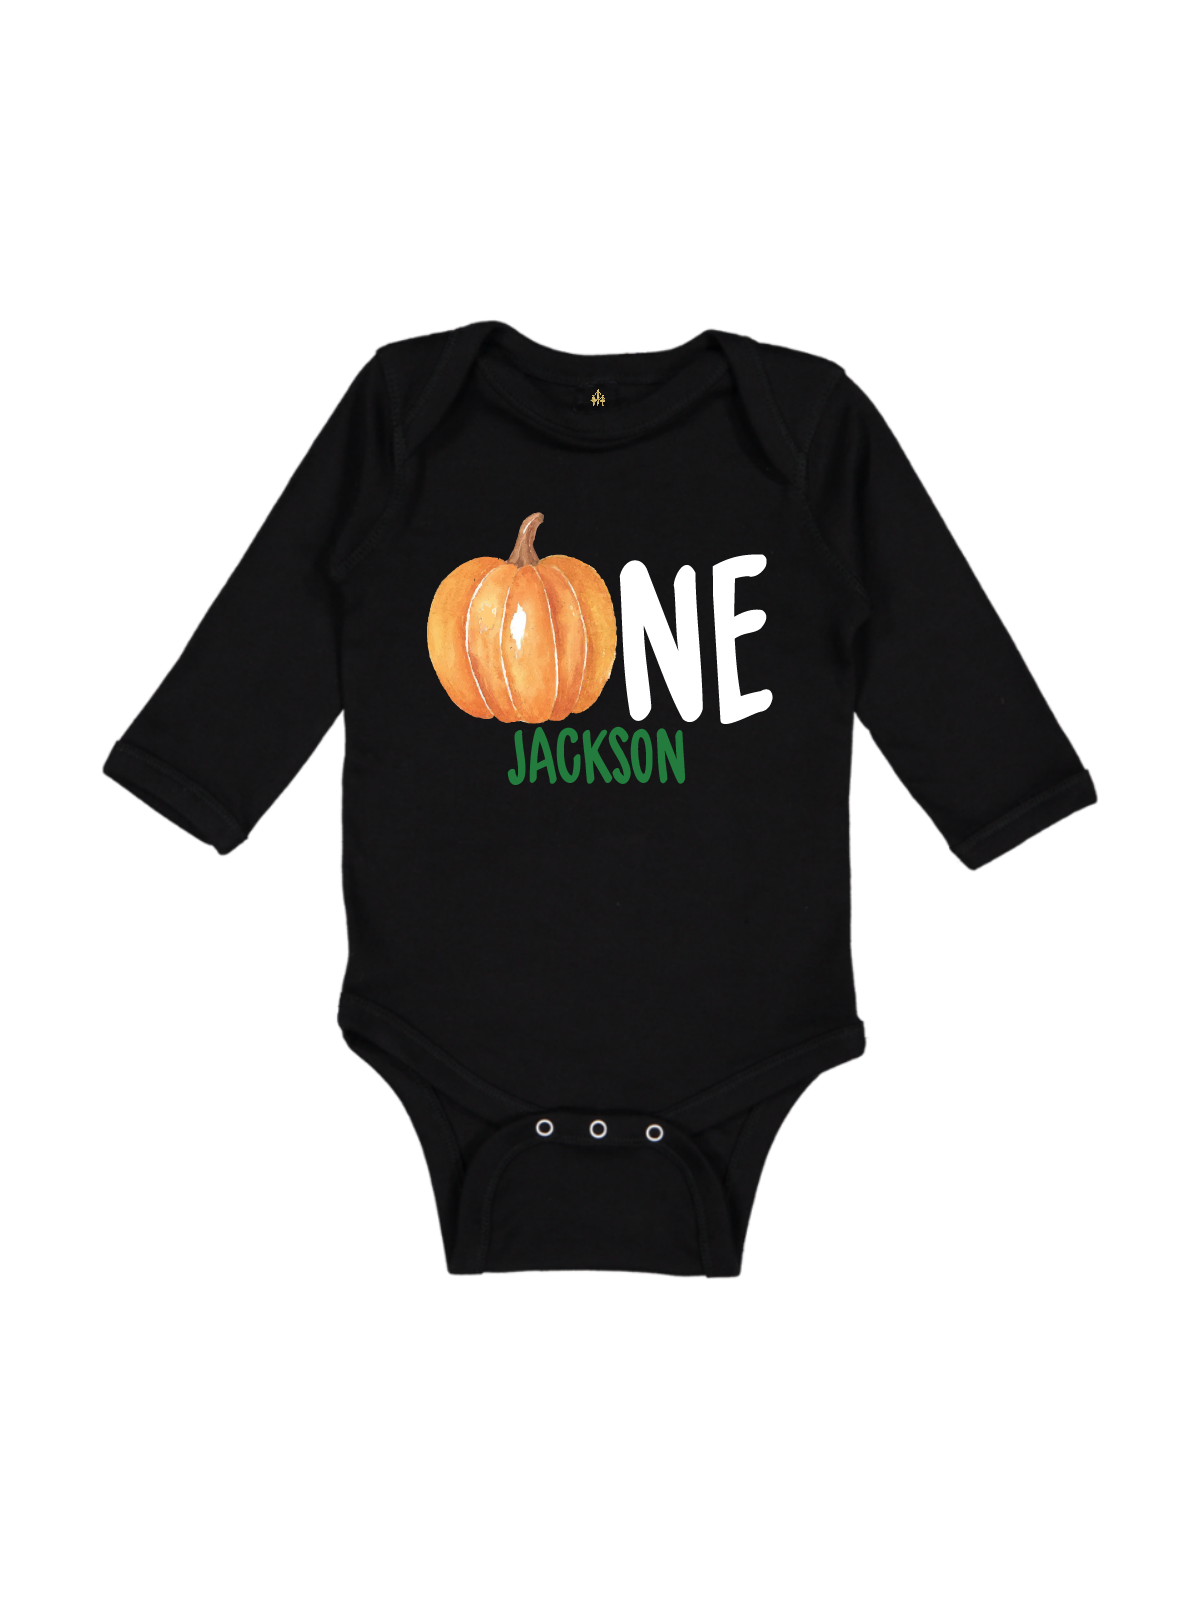 ONE pumpkin baby bodysuit long sleeve in black